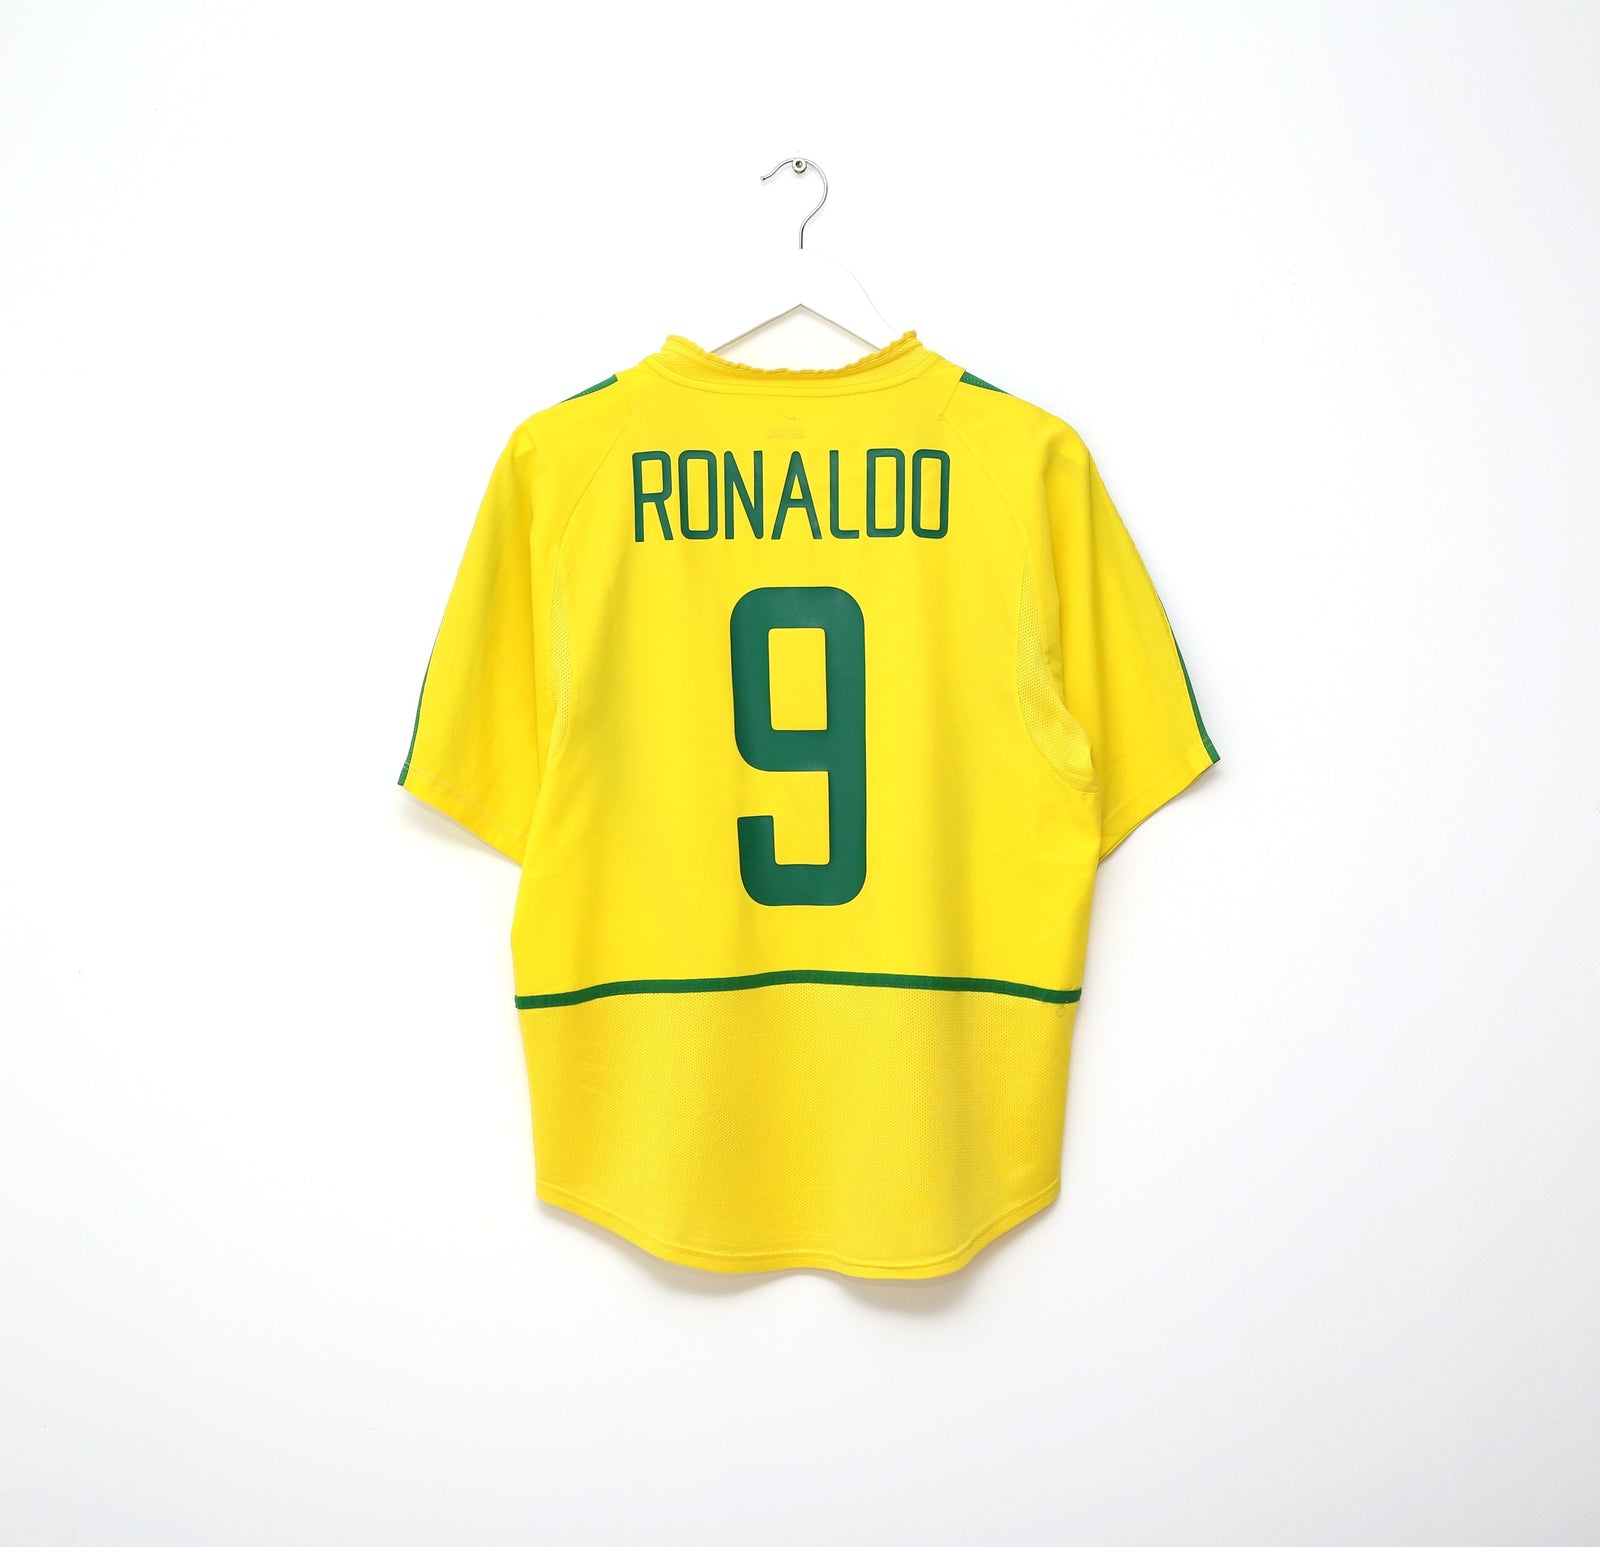 2002 Brazil Away Football Shirt / Vintage Old Nike Soccer Jersey